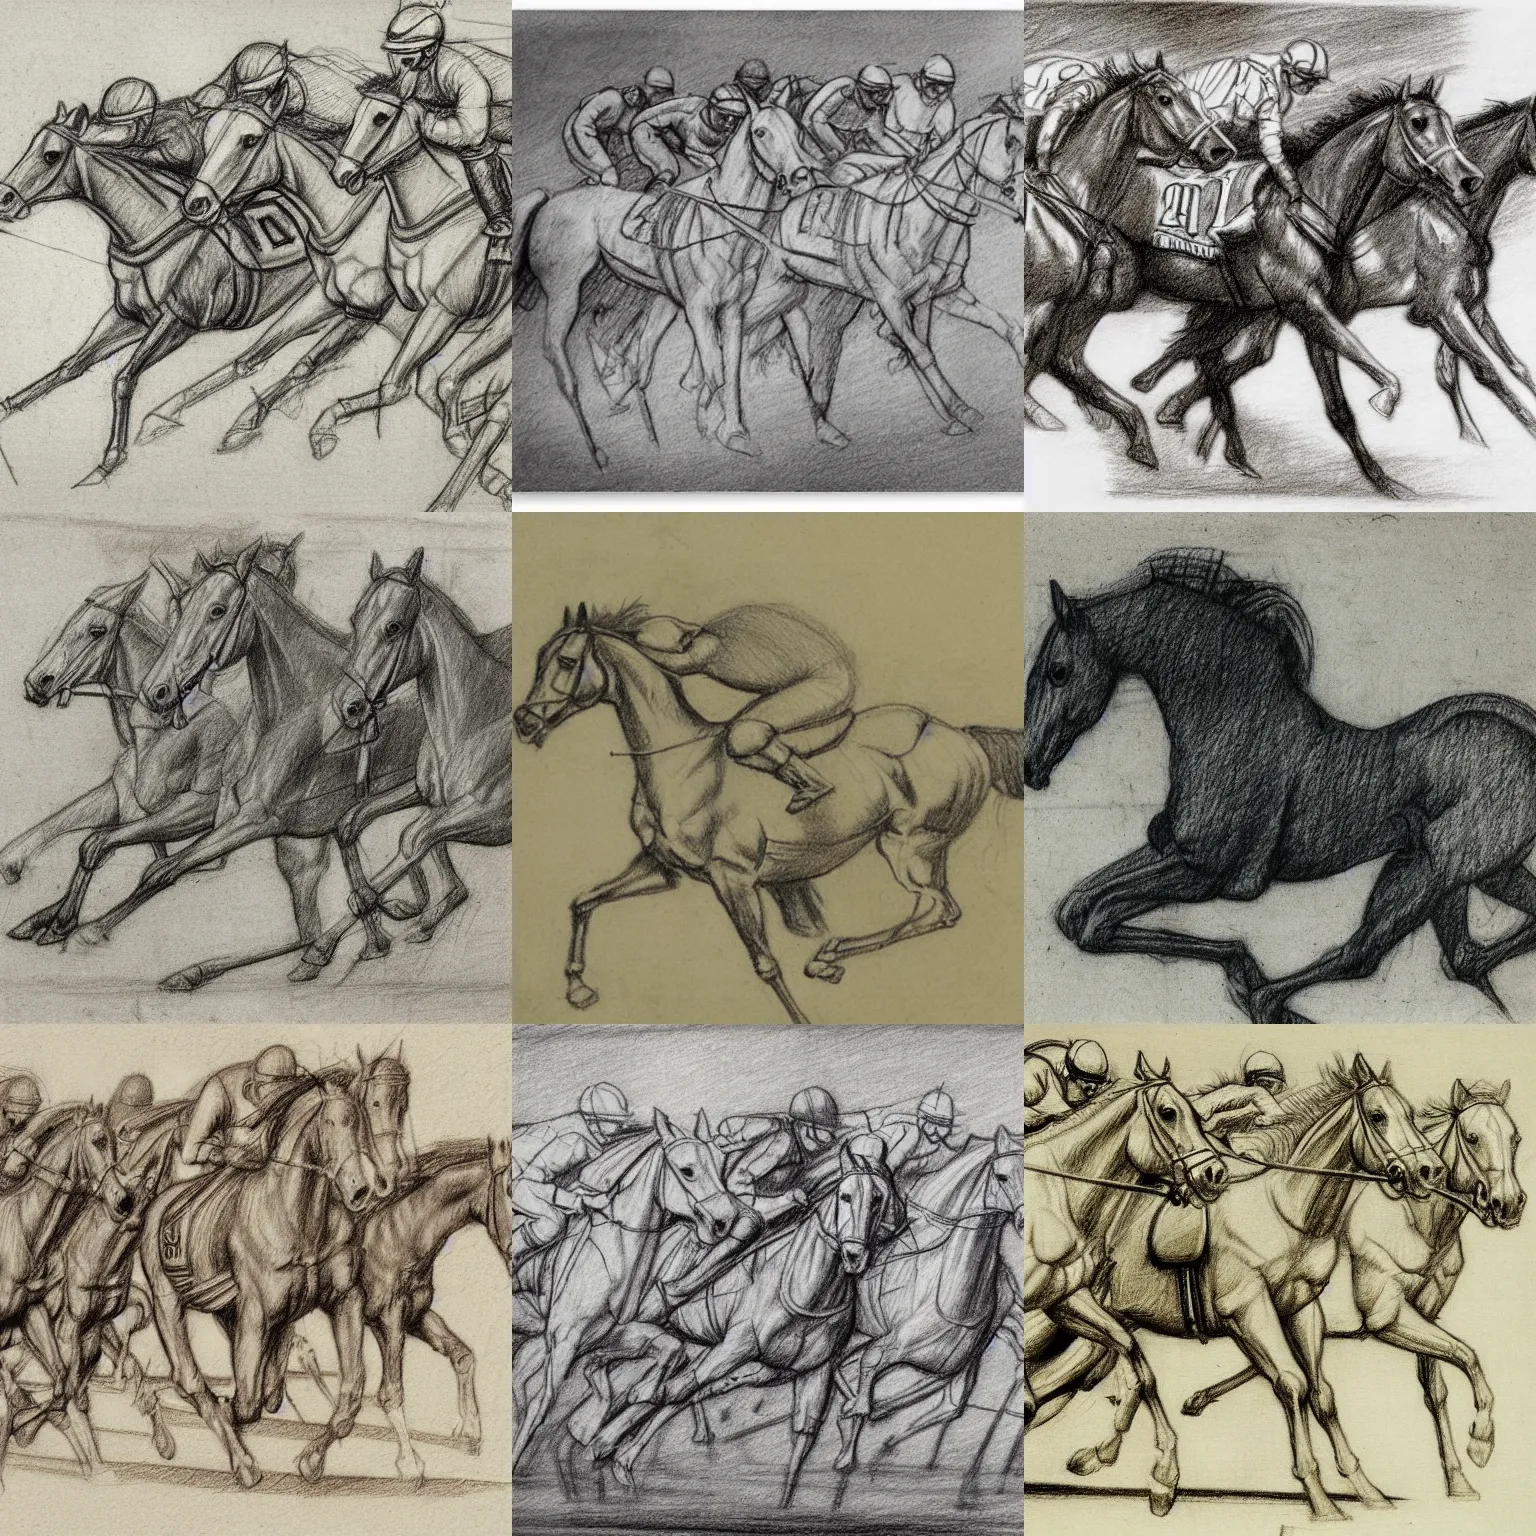 Prompt: horse racing pencil sketch by Leonardo da Vinci